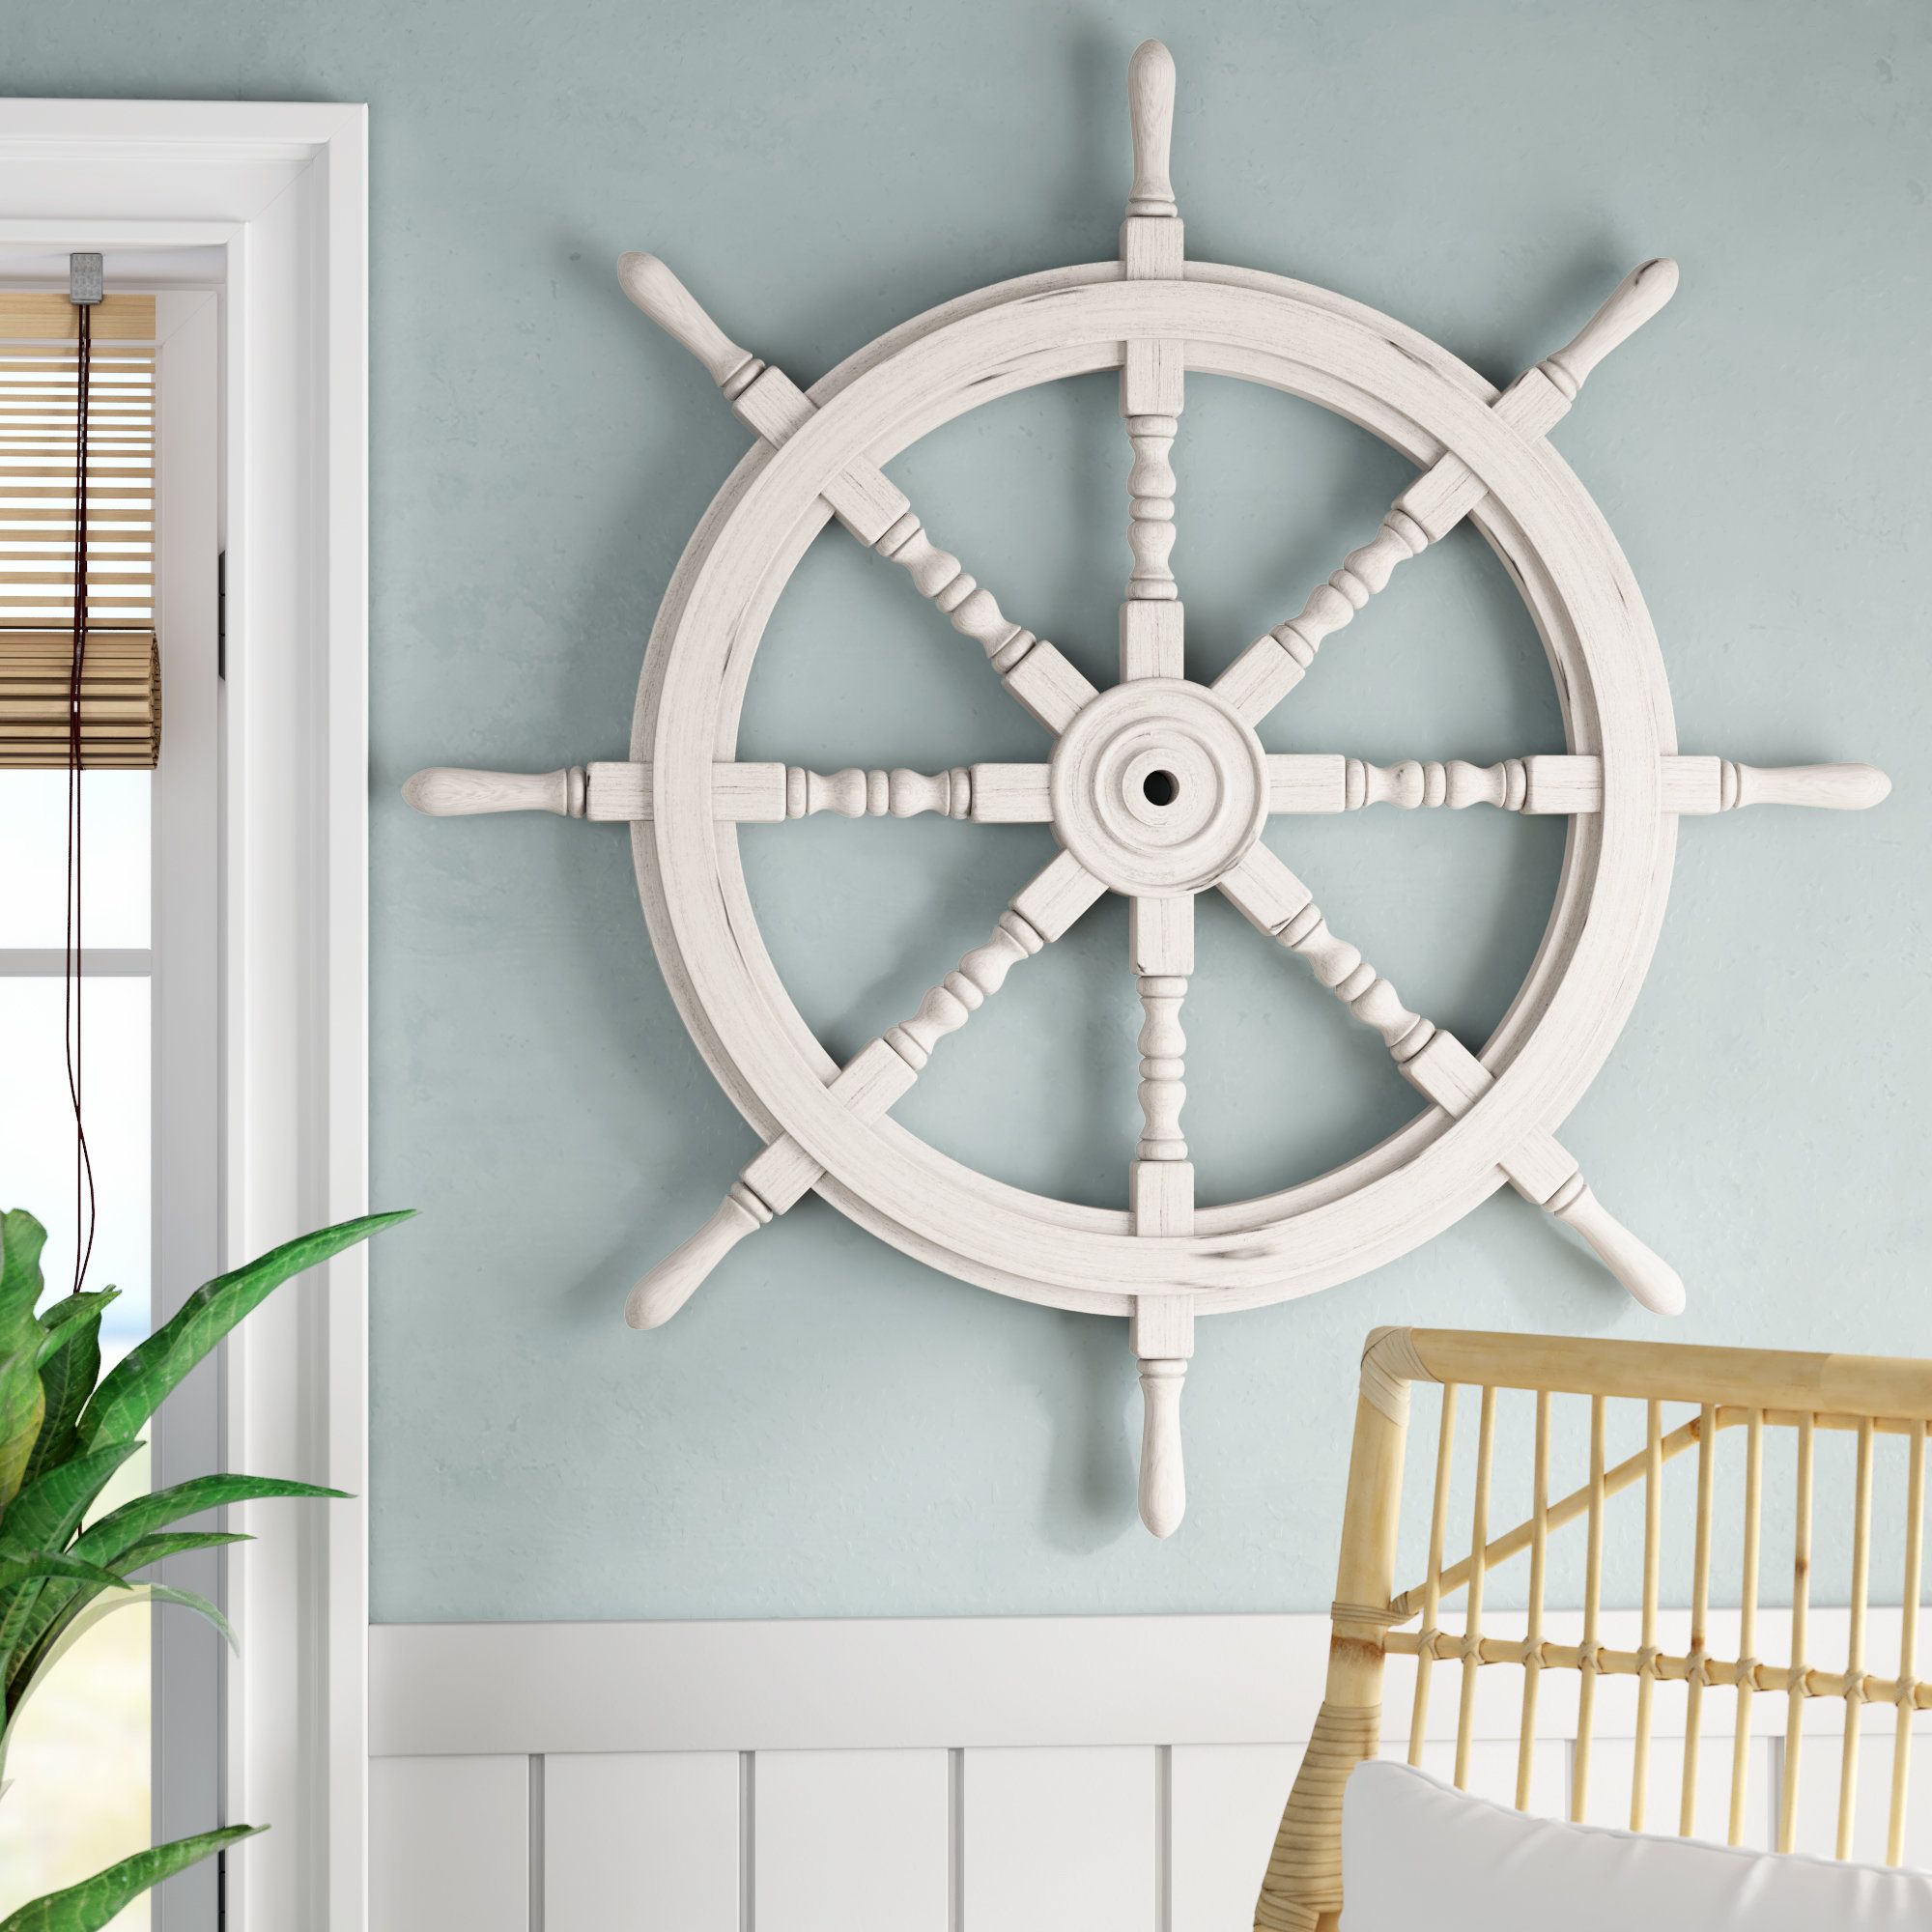 Captains Wheel Wall Decor | Wayfair In 4 Piece Handwoven Wheel Wall Decor Sets (Photo 8 of 30)